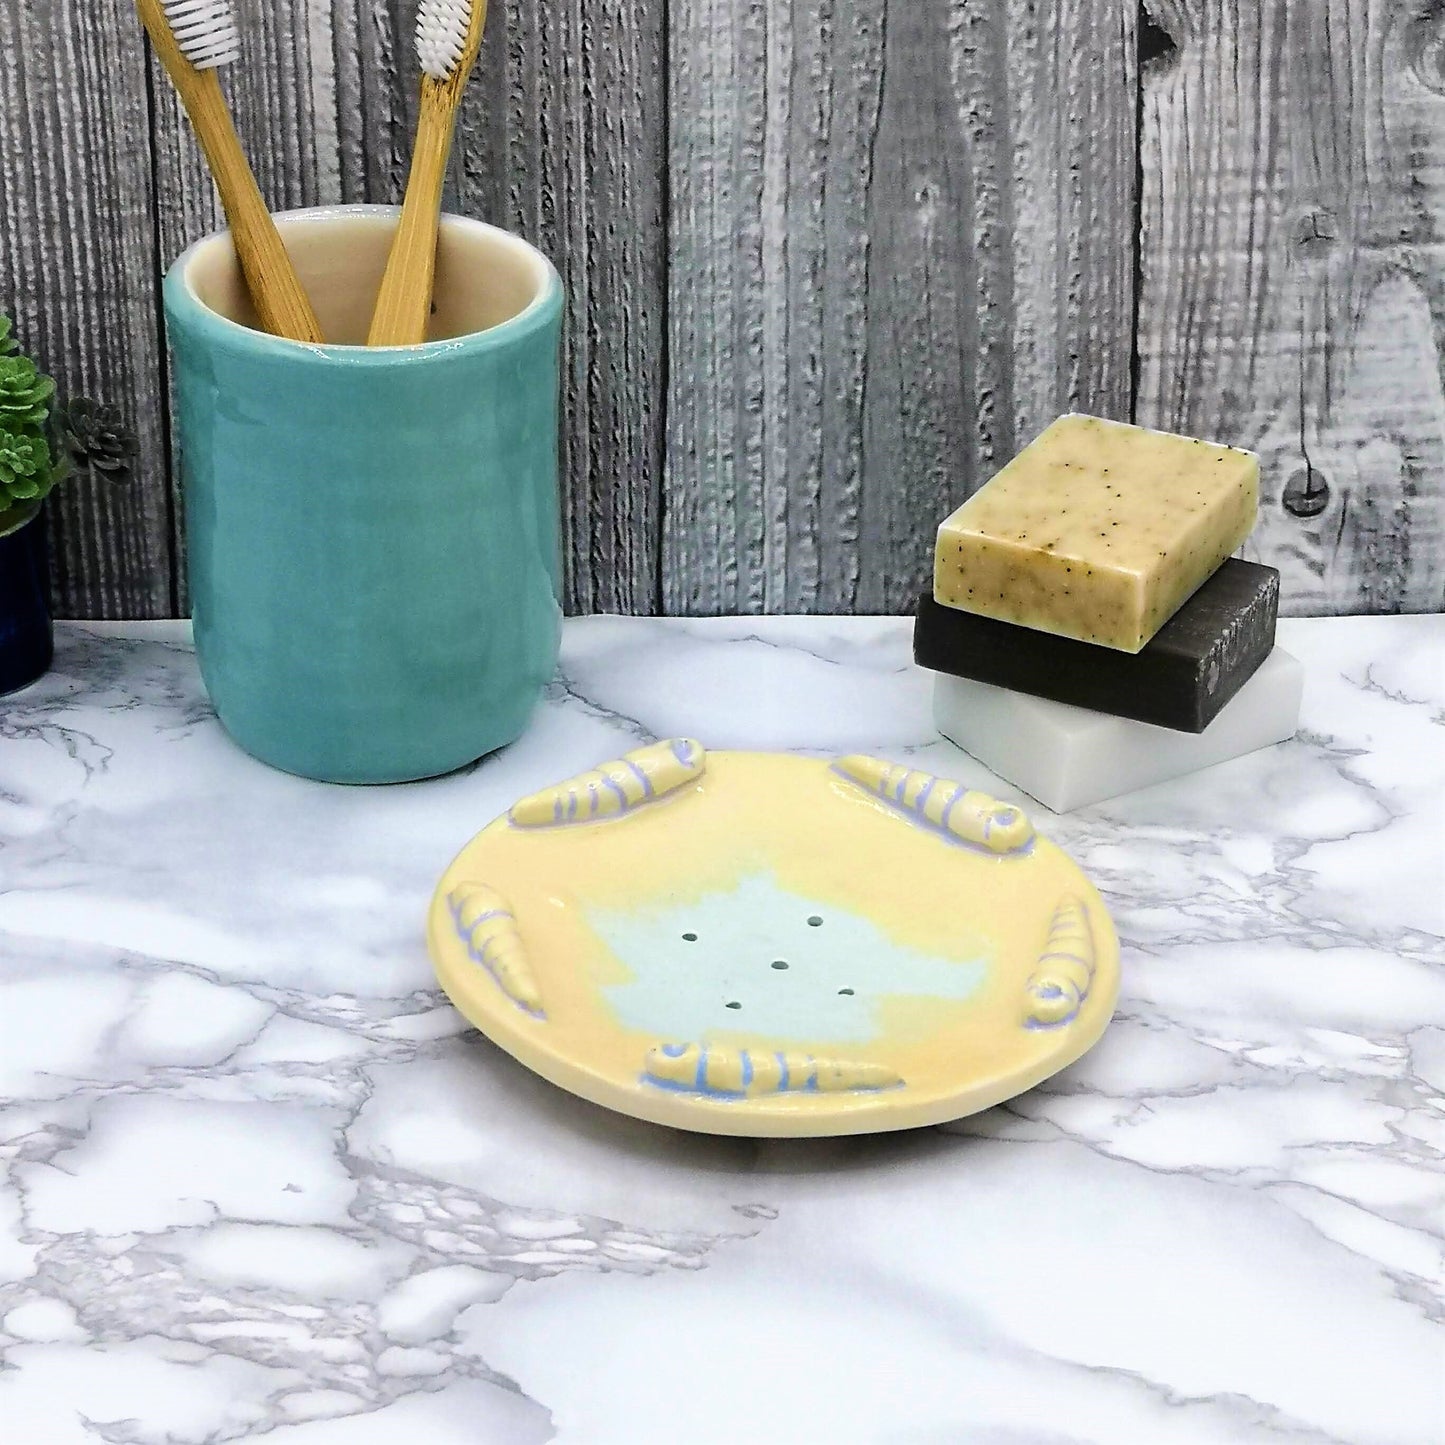 Handmade Ceramic Sea Shell Soap Dish Dispenser Yellow and Blue, Beach Themed Decor Draining Soap Bar Holder, Bathroom Tray For Shaving Soap - Ceramica Ana Rafael